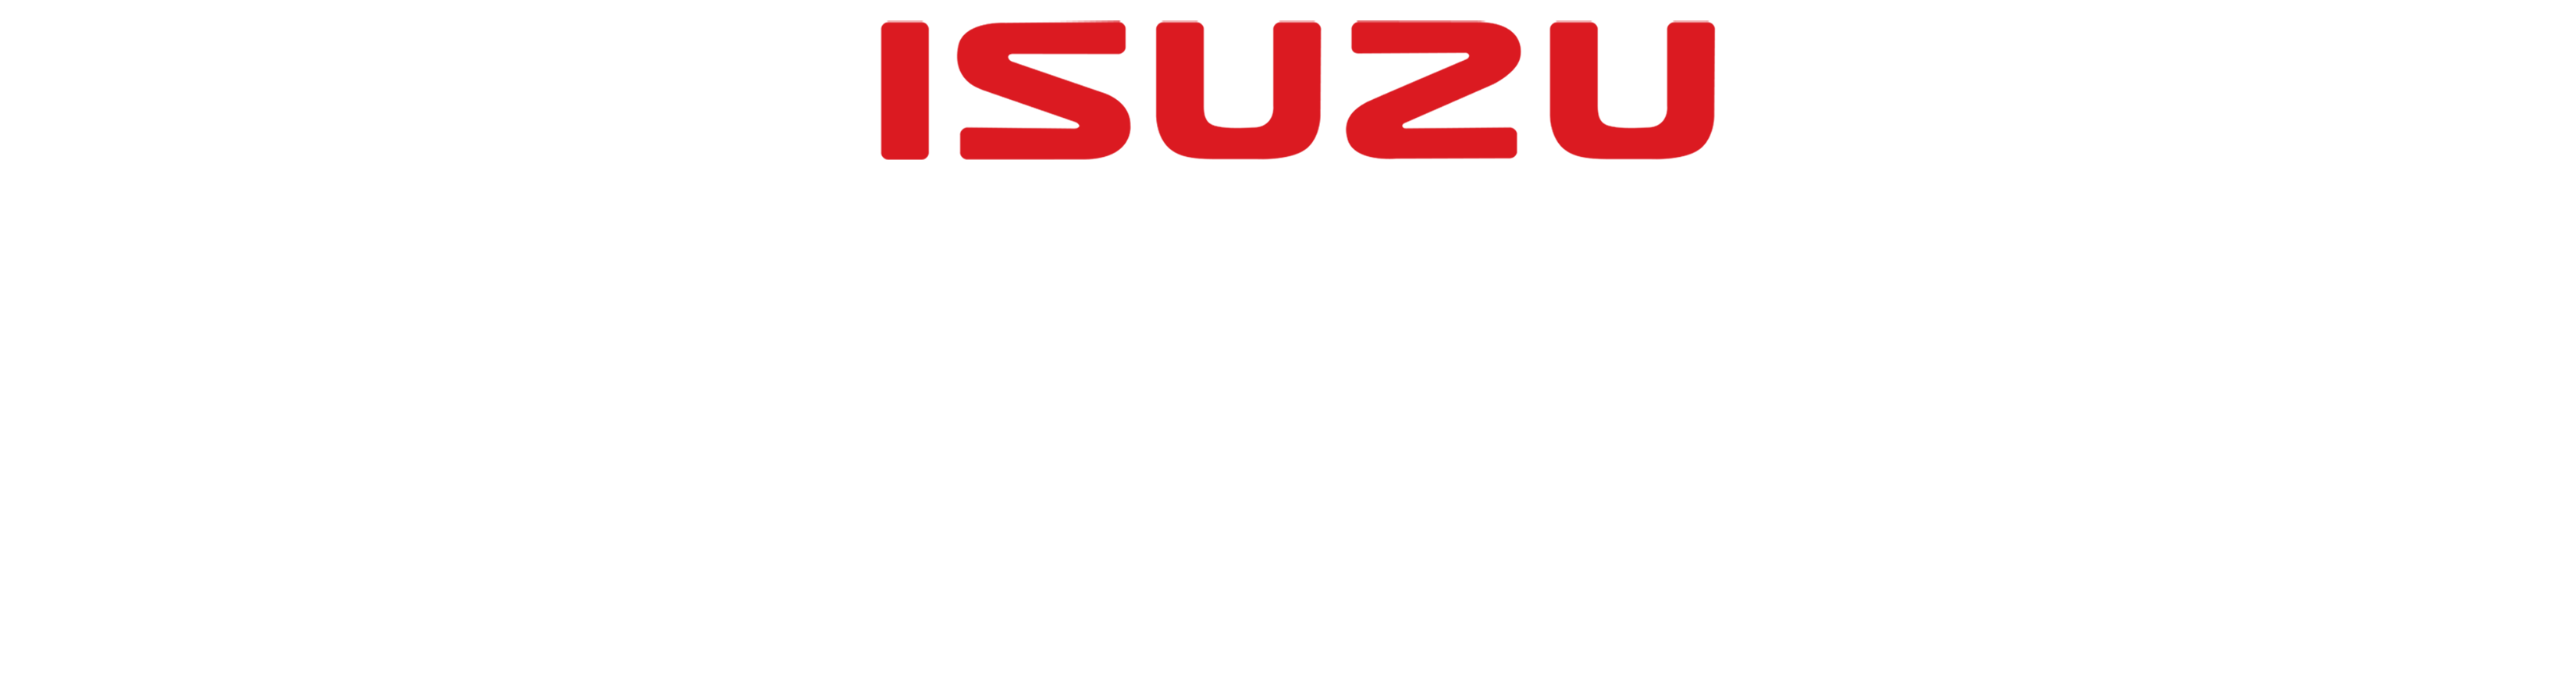 N-Series logo